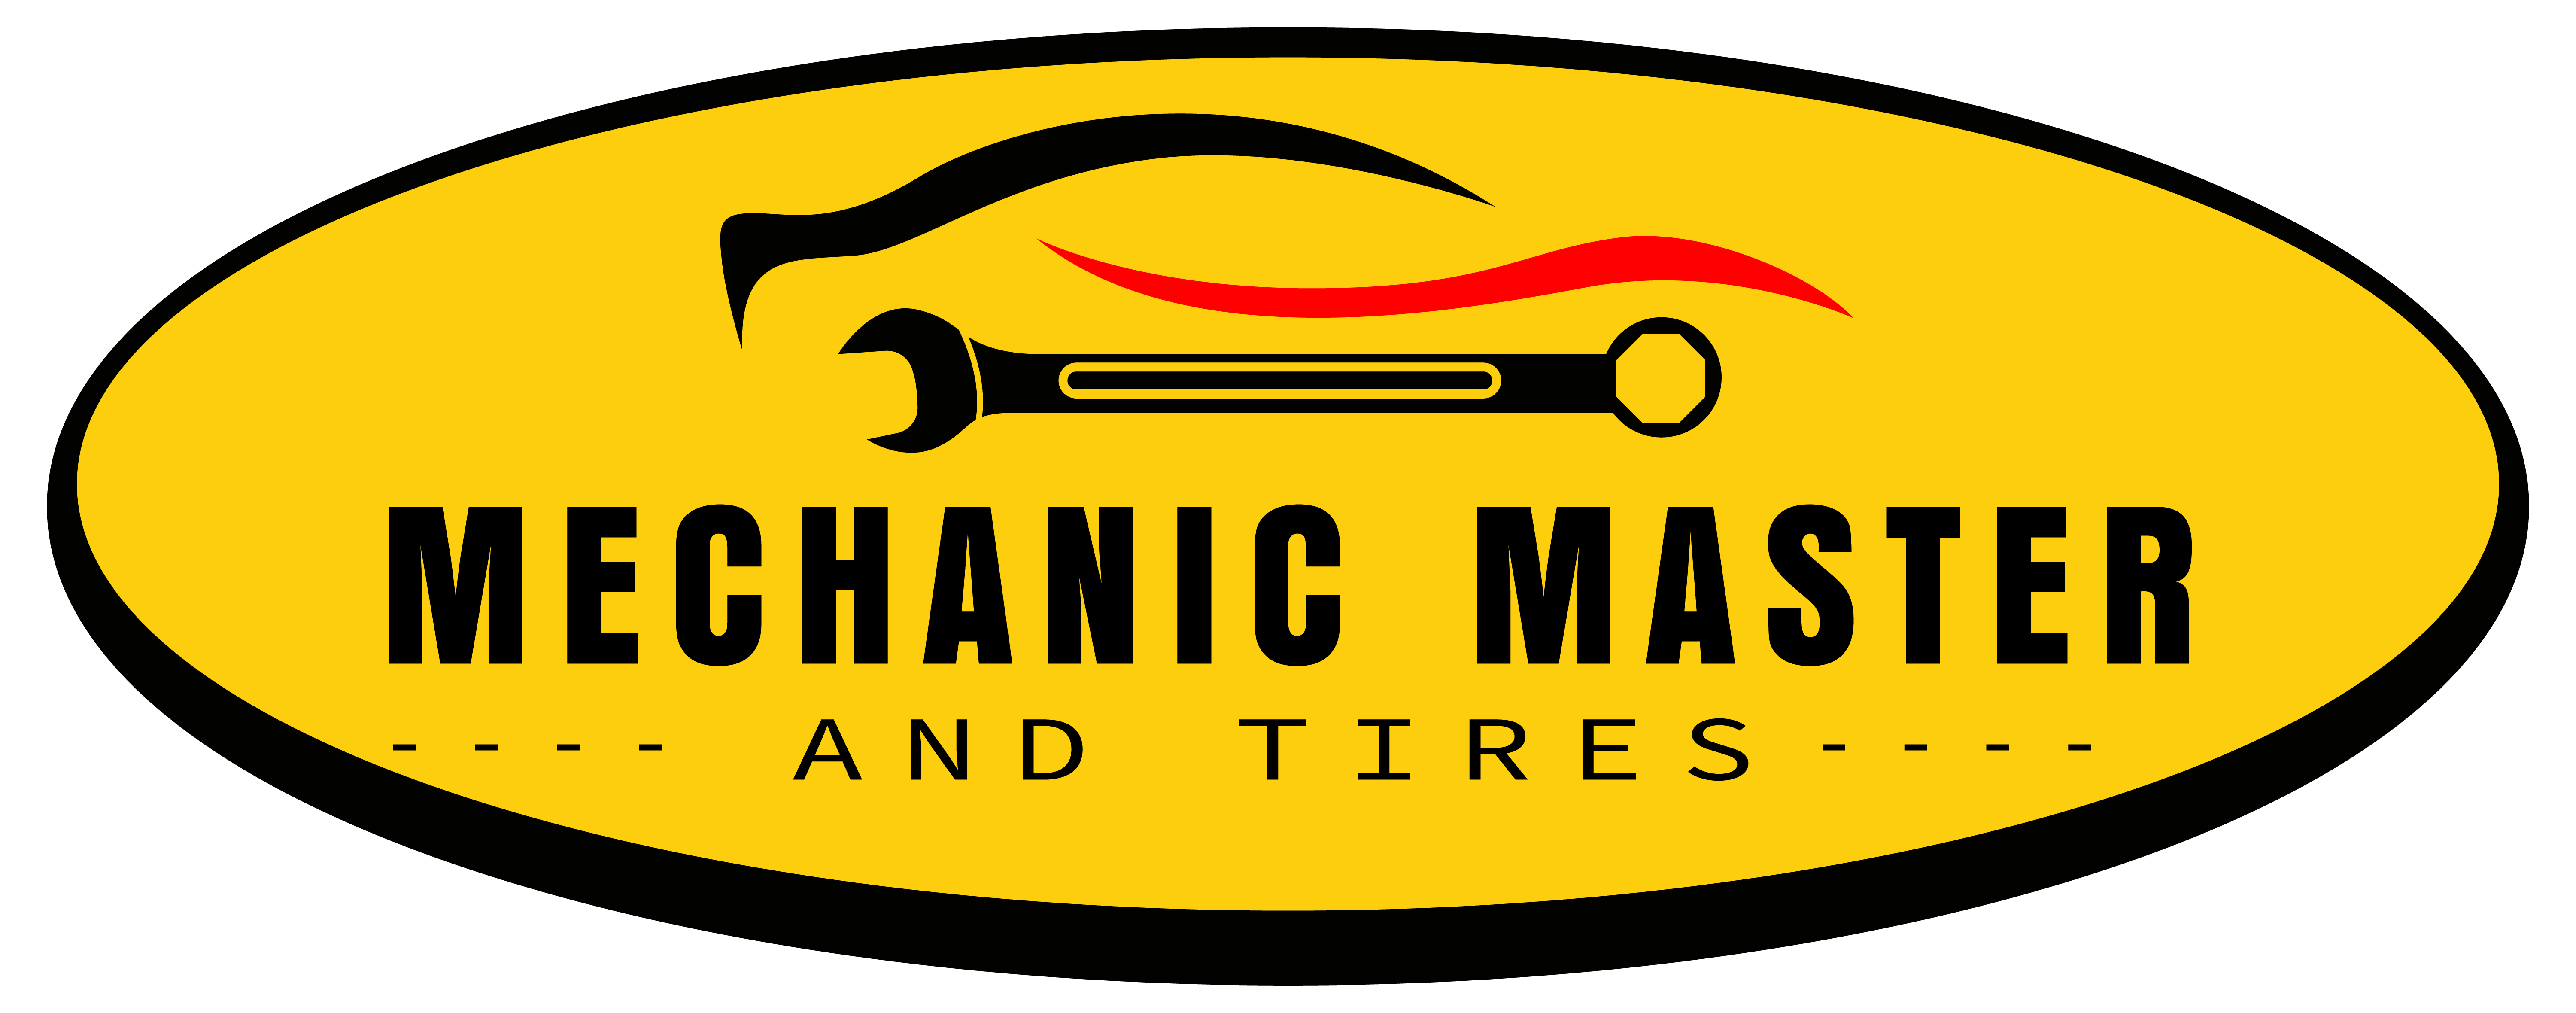 Mechanic Master & Tires